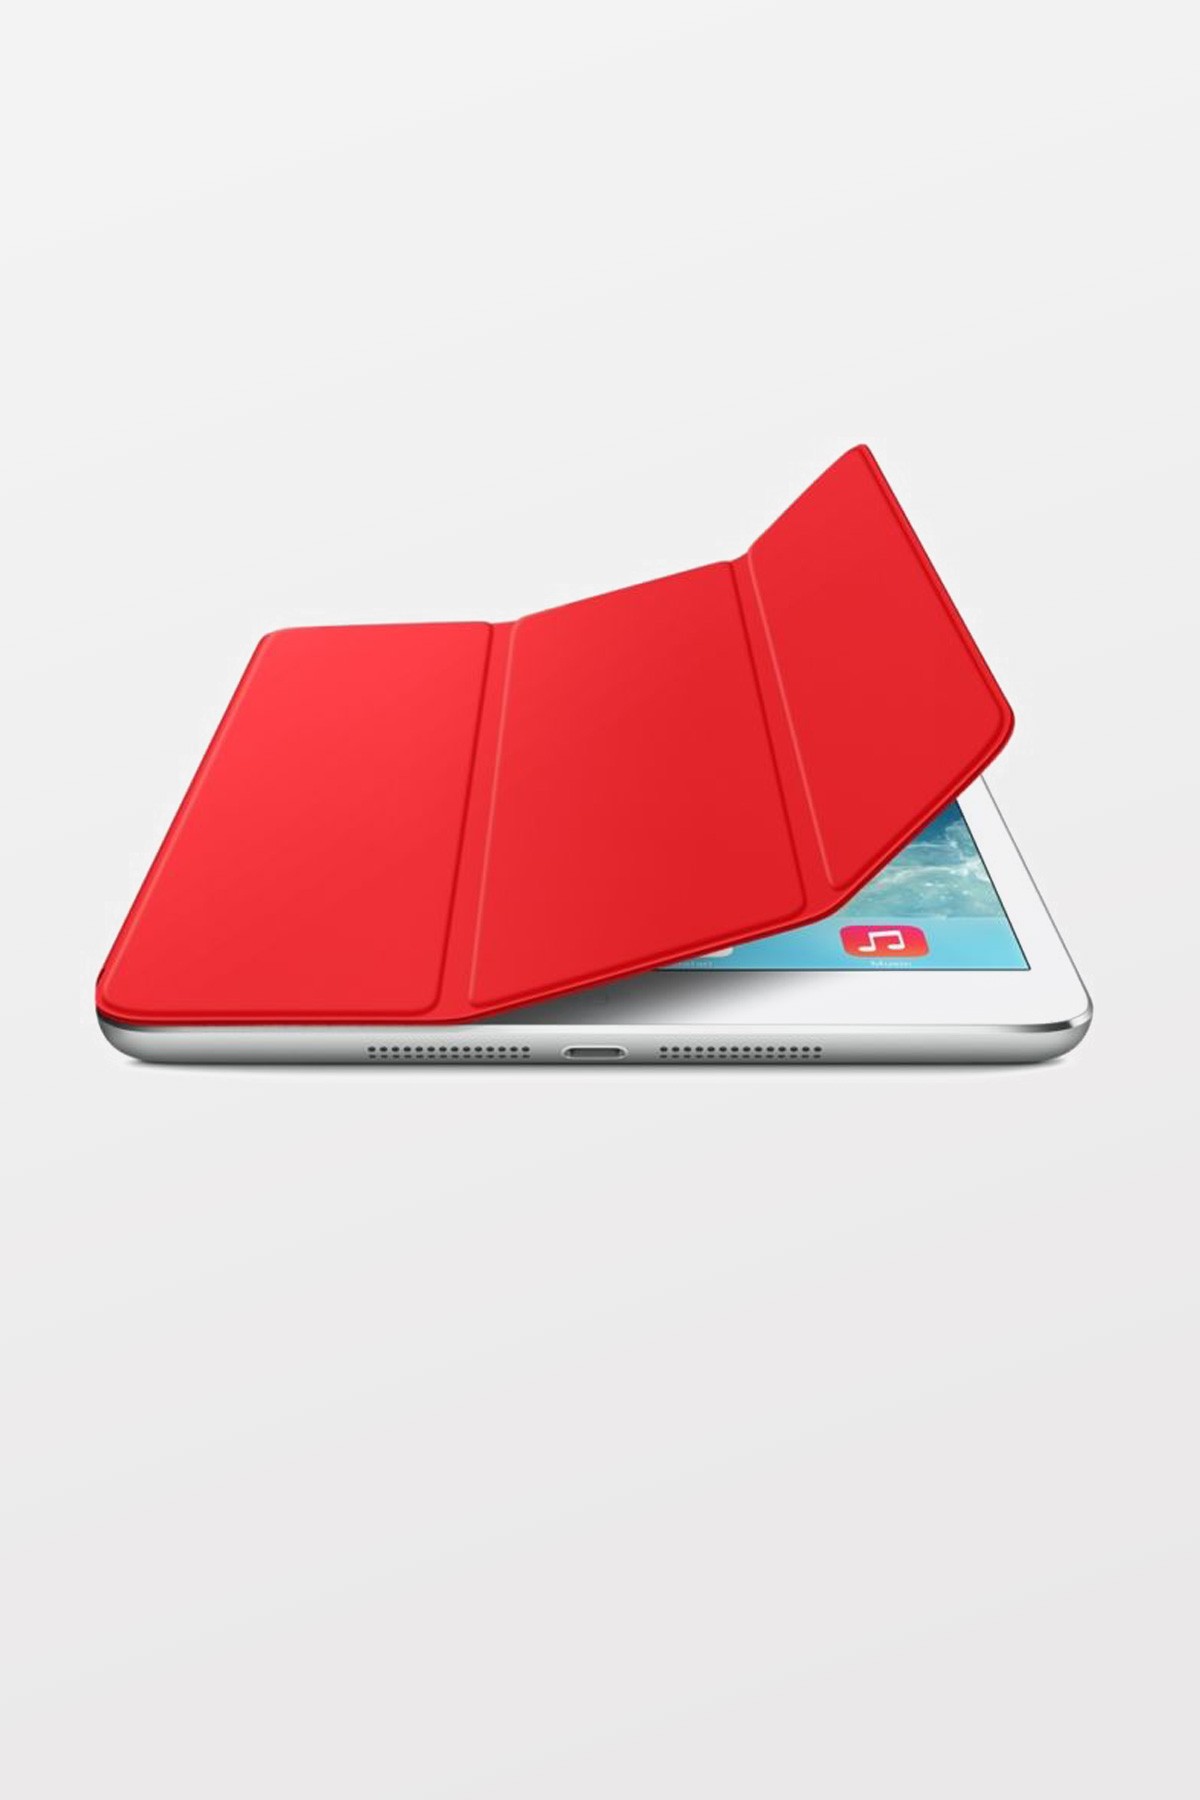 EOL Apple iPad mini Smart Cover - Red - IPad Mini 1,2,3